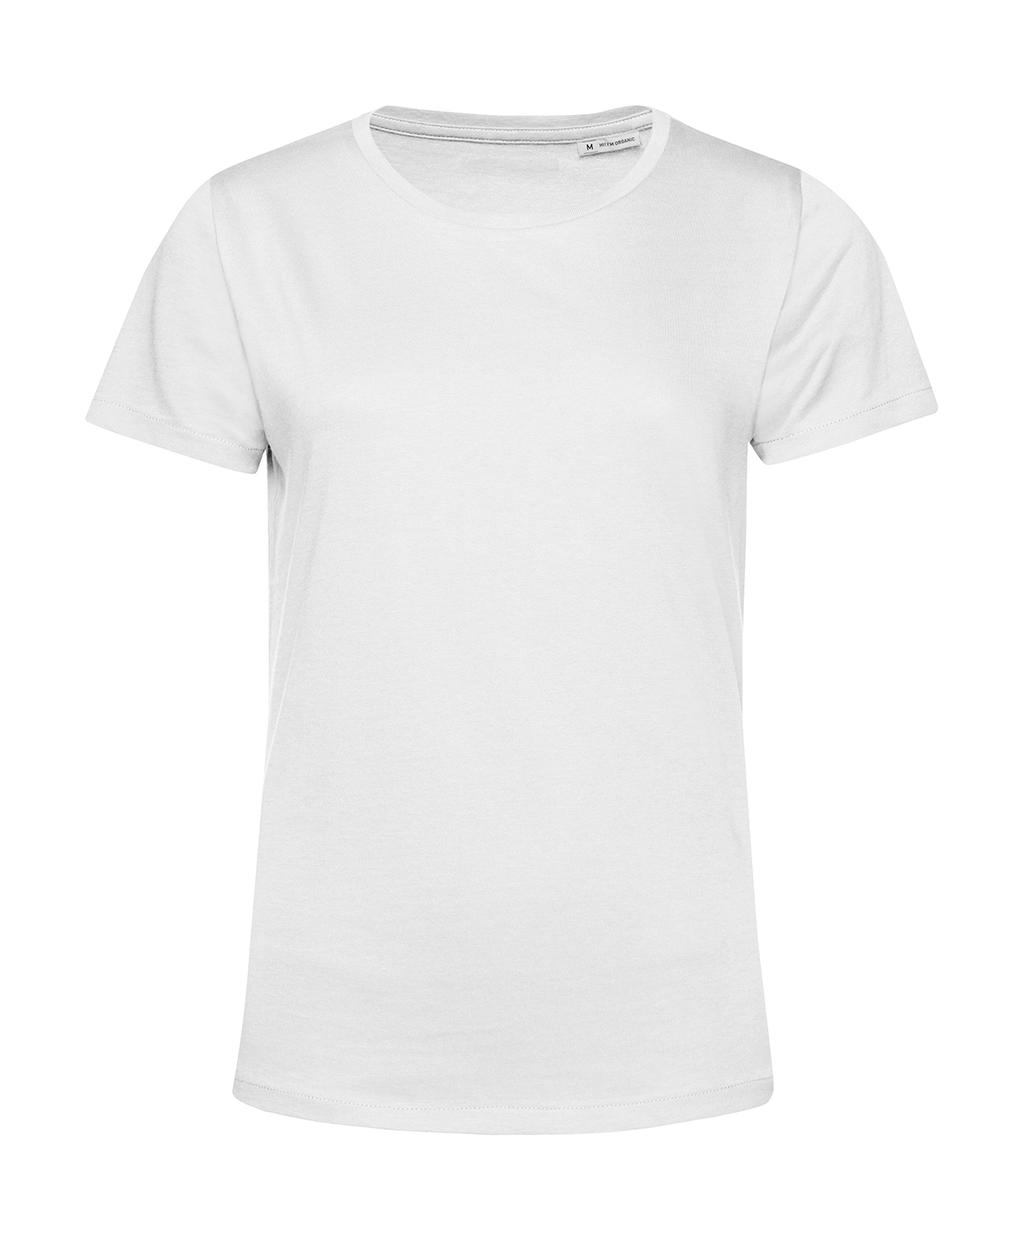 Tričko dámské BC Organic Inspire E150 - bílé, S